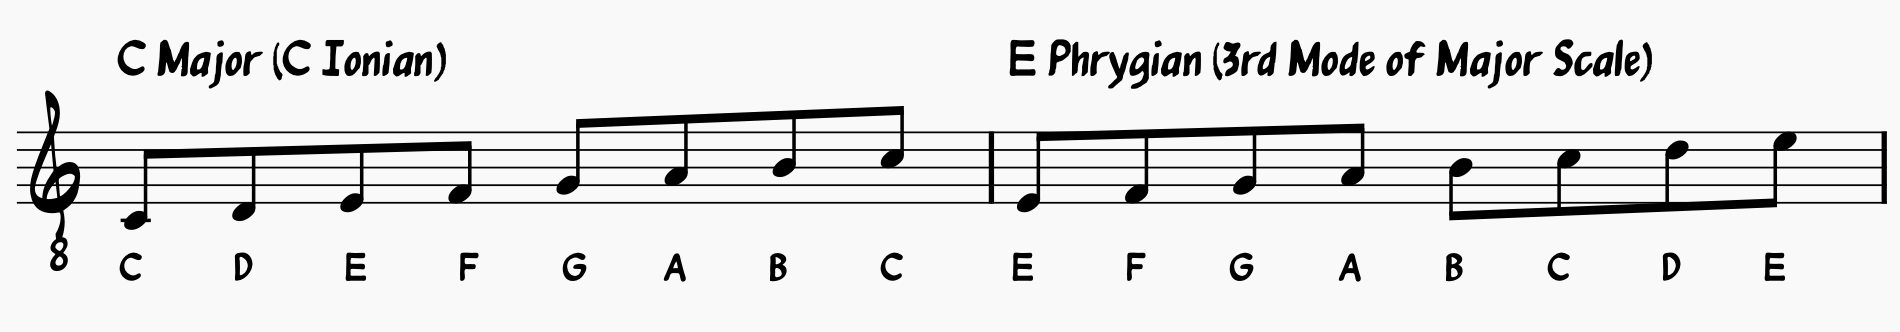 C major and the E Phrygian mode are the same sequence of notes. C-D-E-F-G-A-B-C and E-F-G-A-B-C-D-E